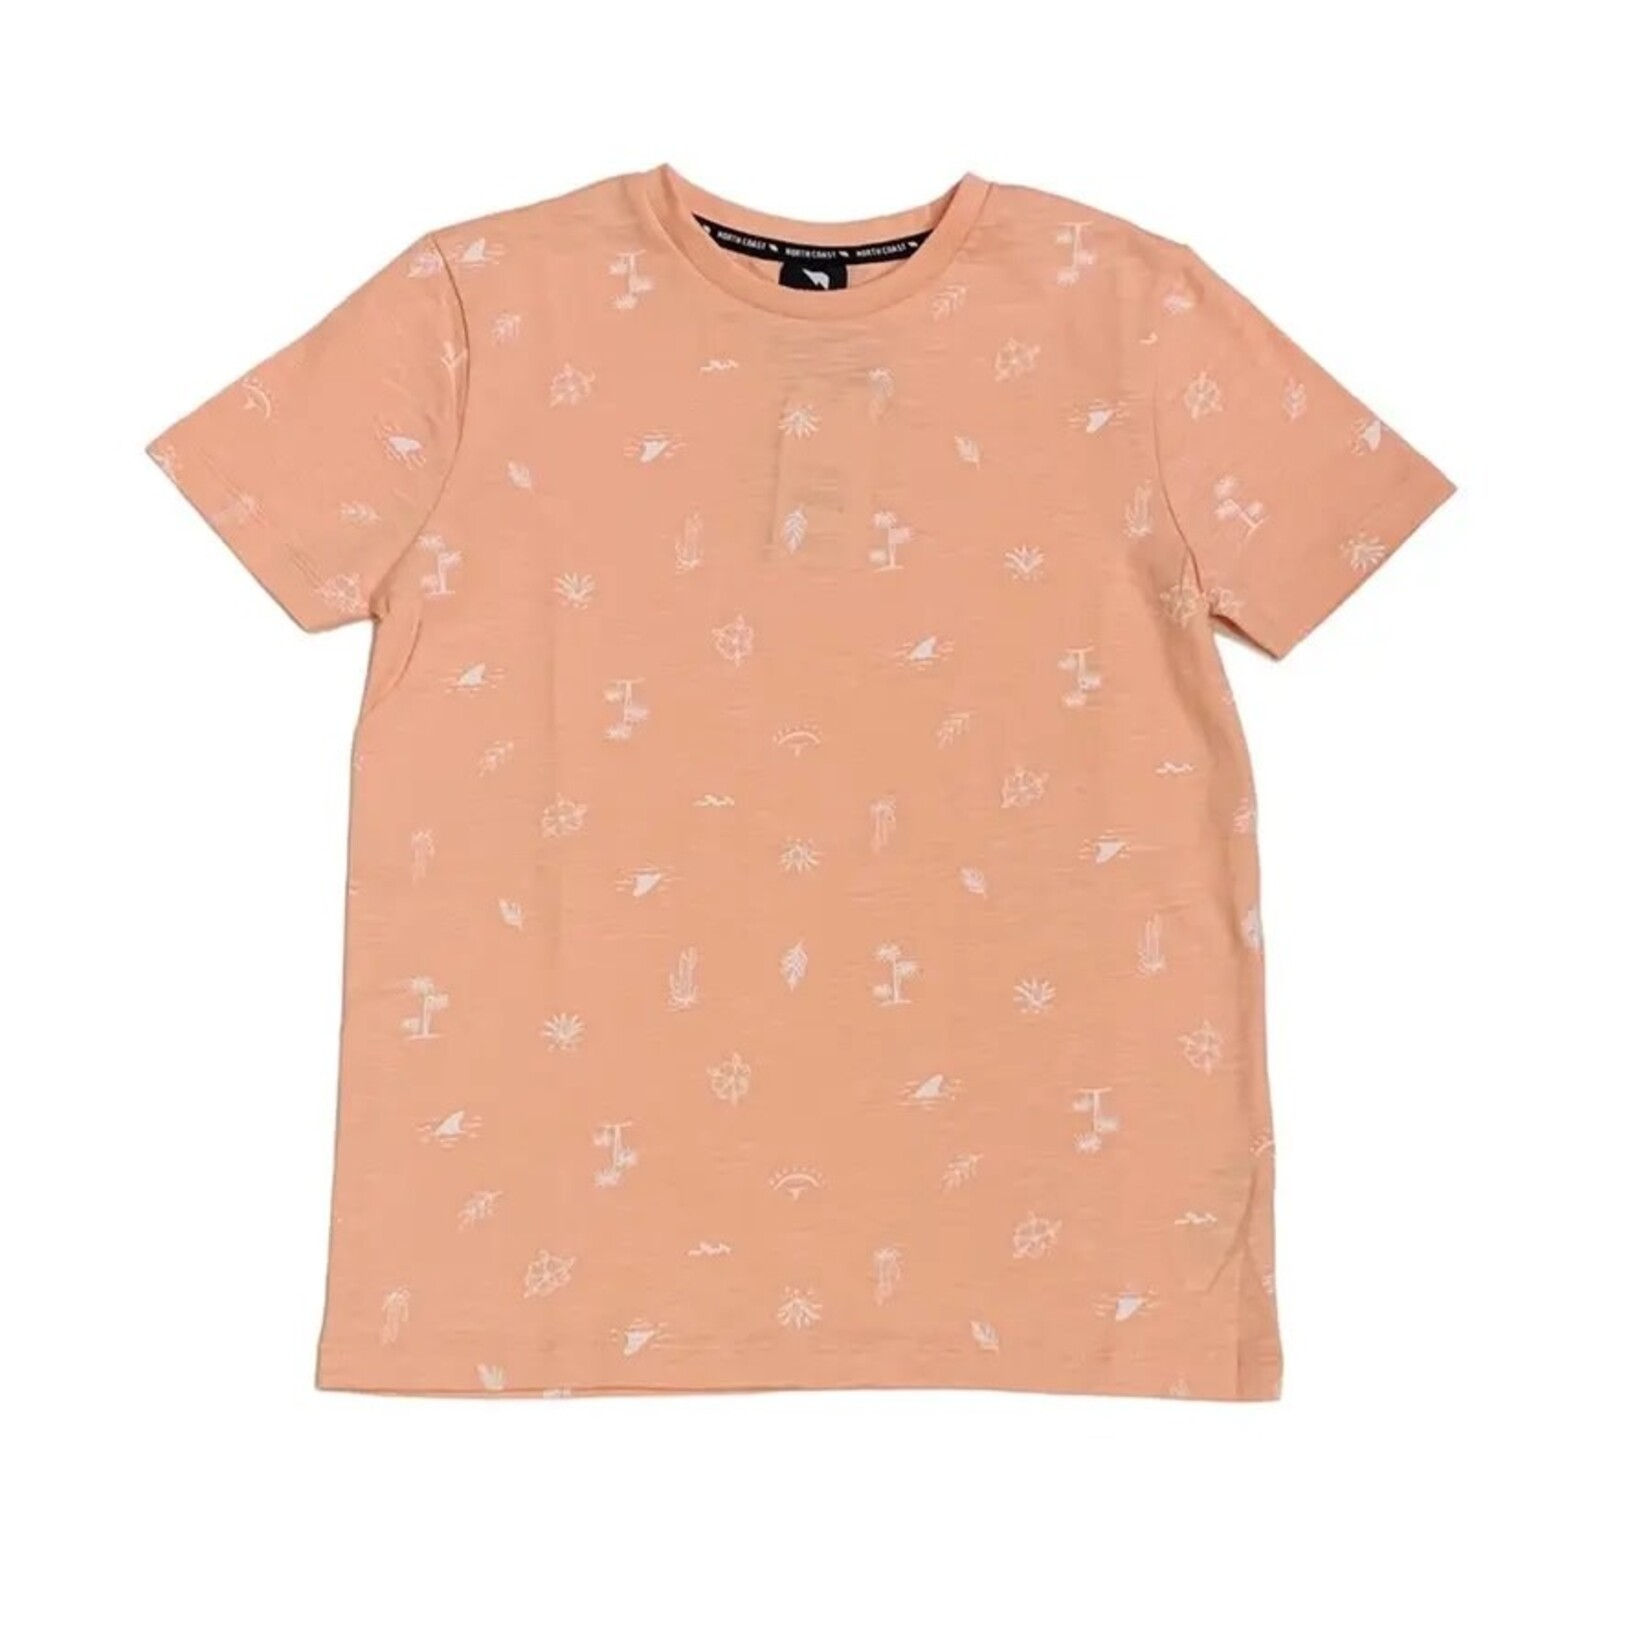 Northcoast NORTHCOAST - Salmon pink short-sleeved t-shirt with white summer print